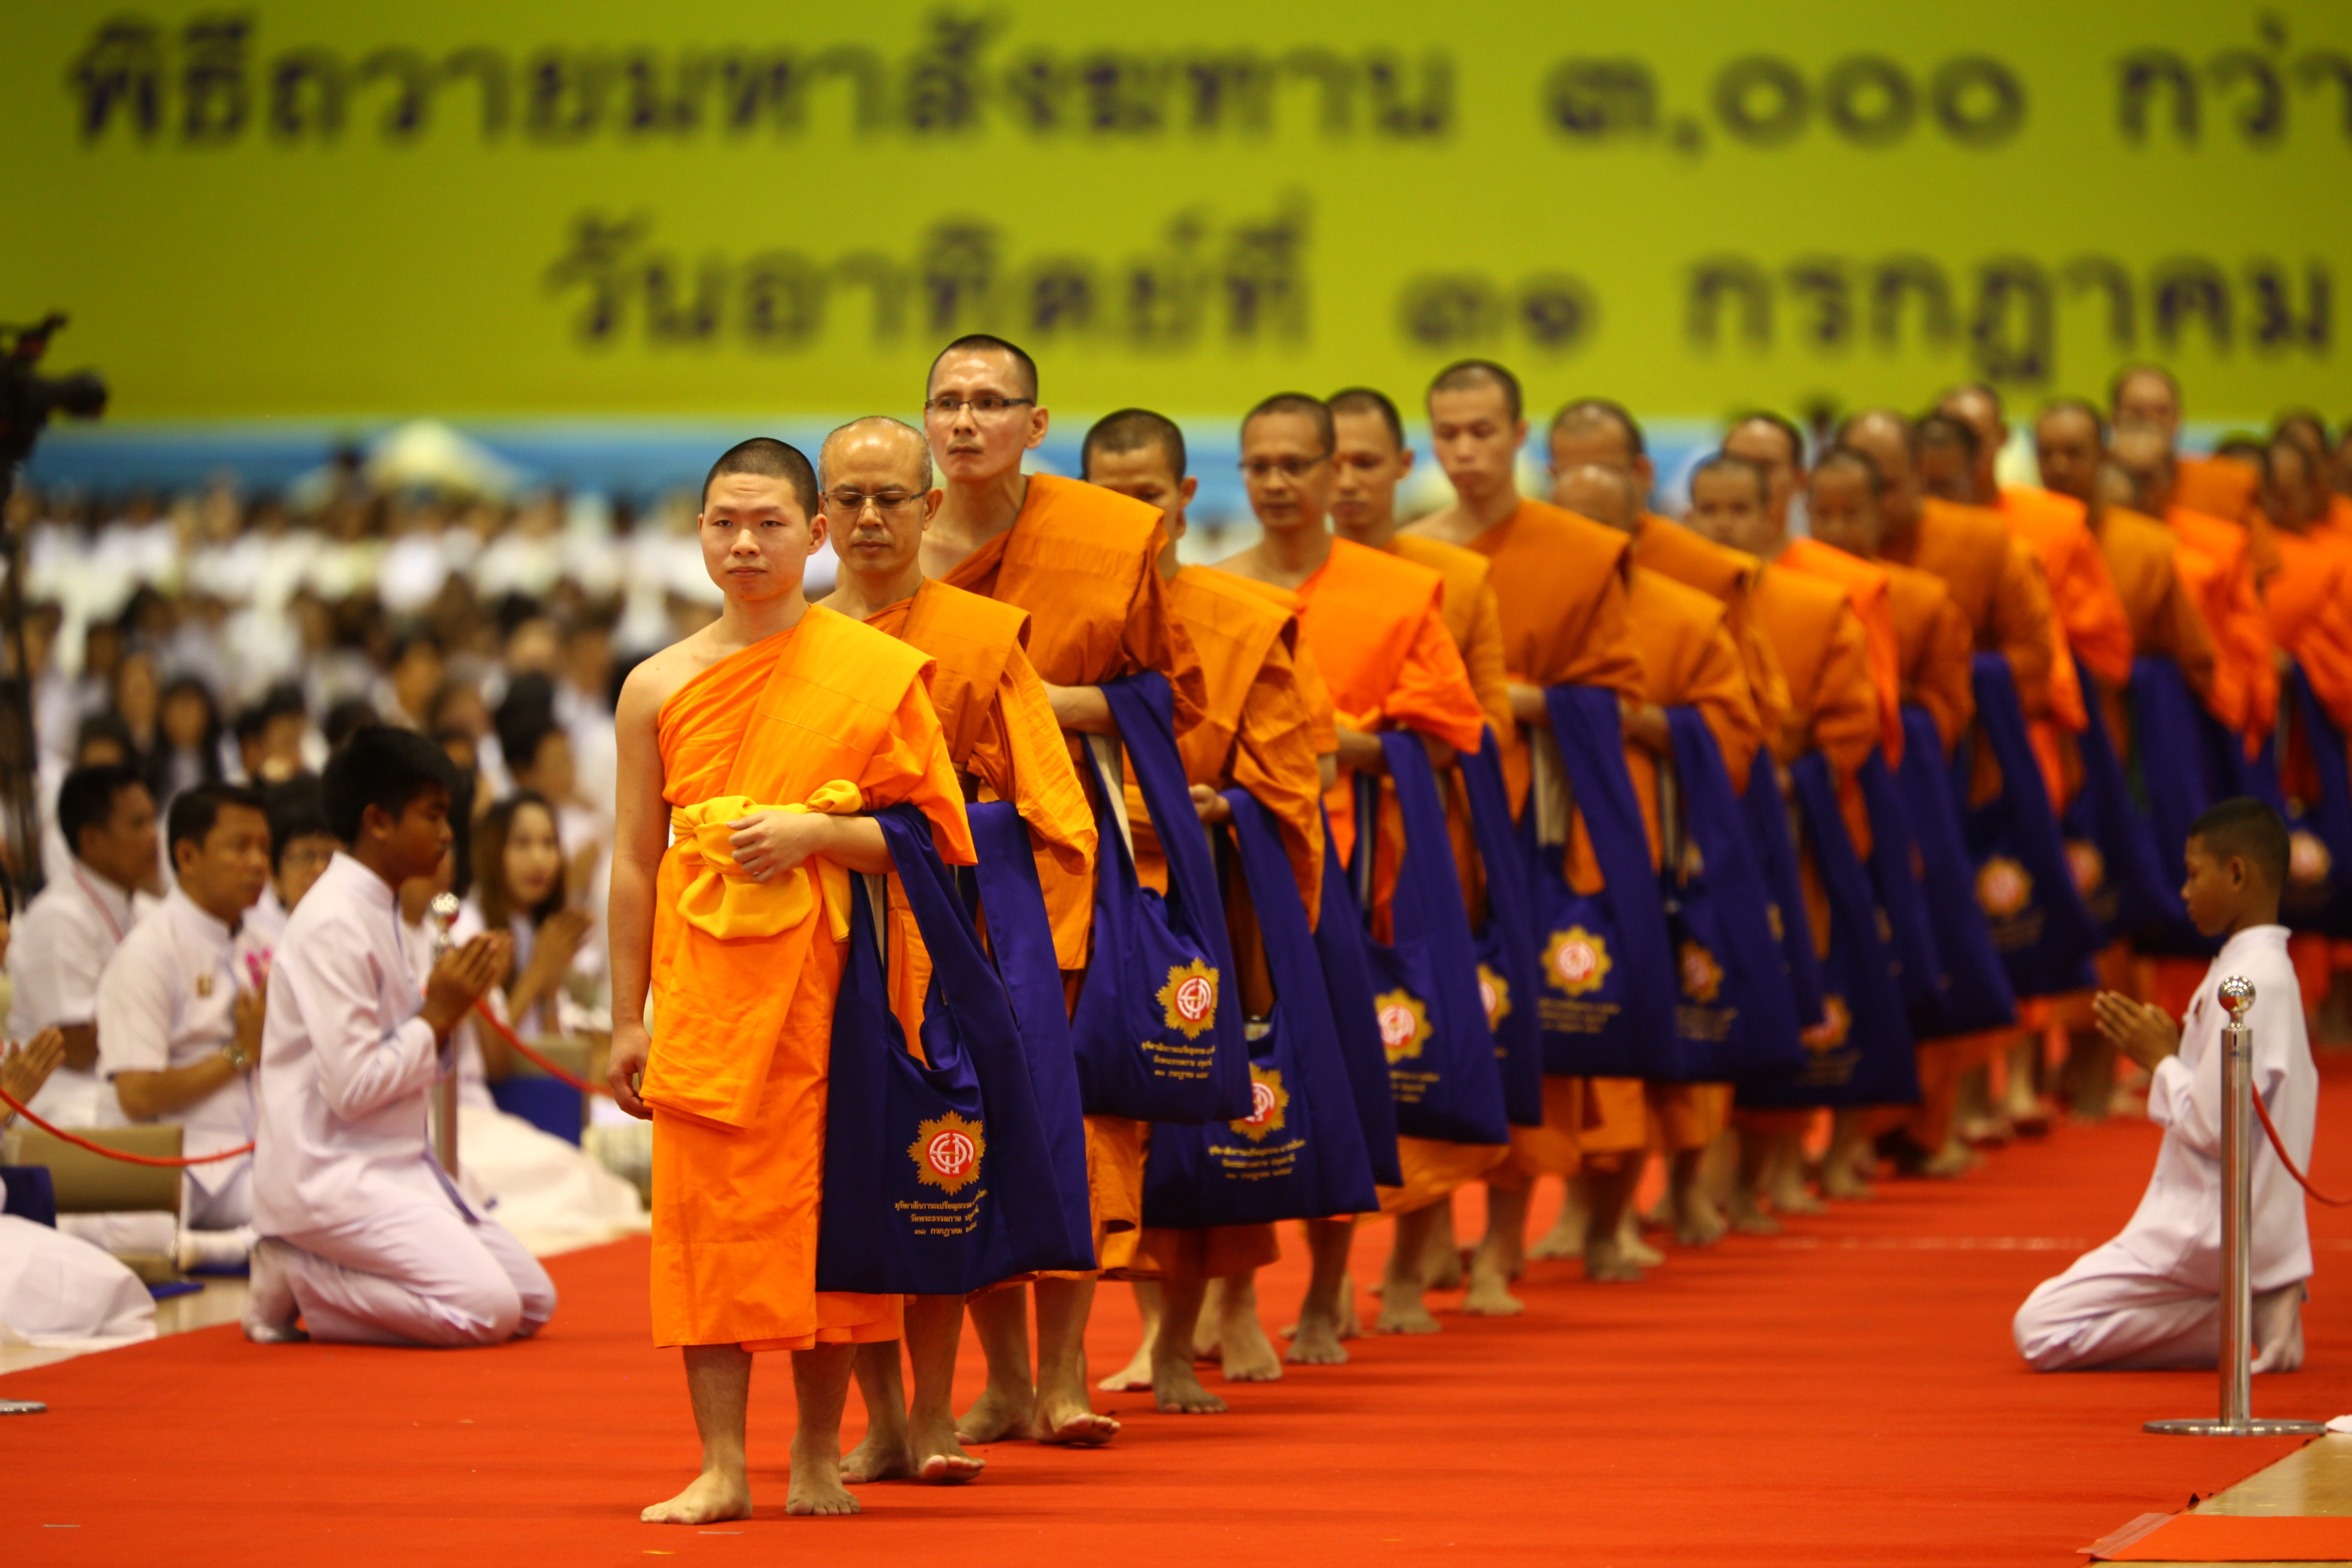 monks in orange clothing